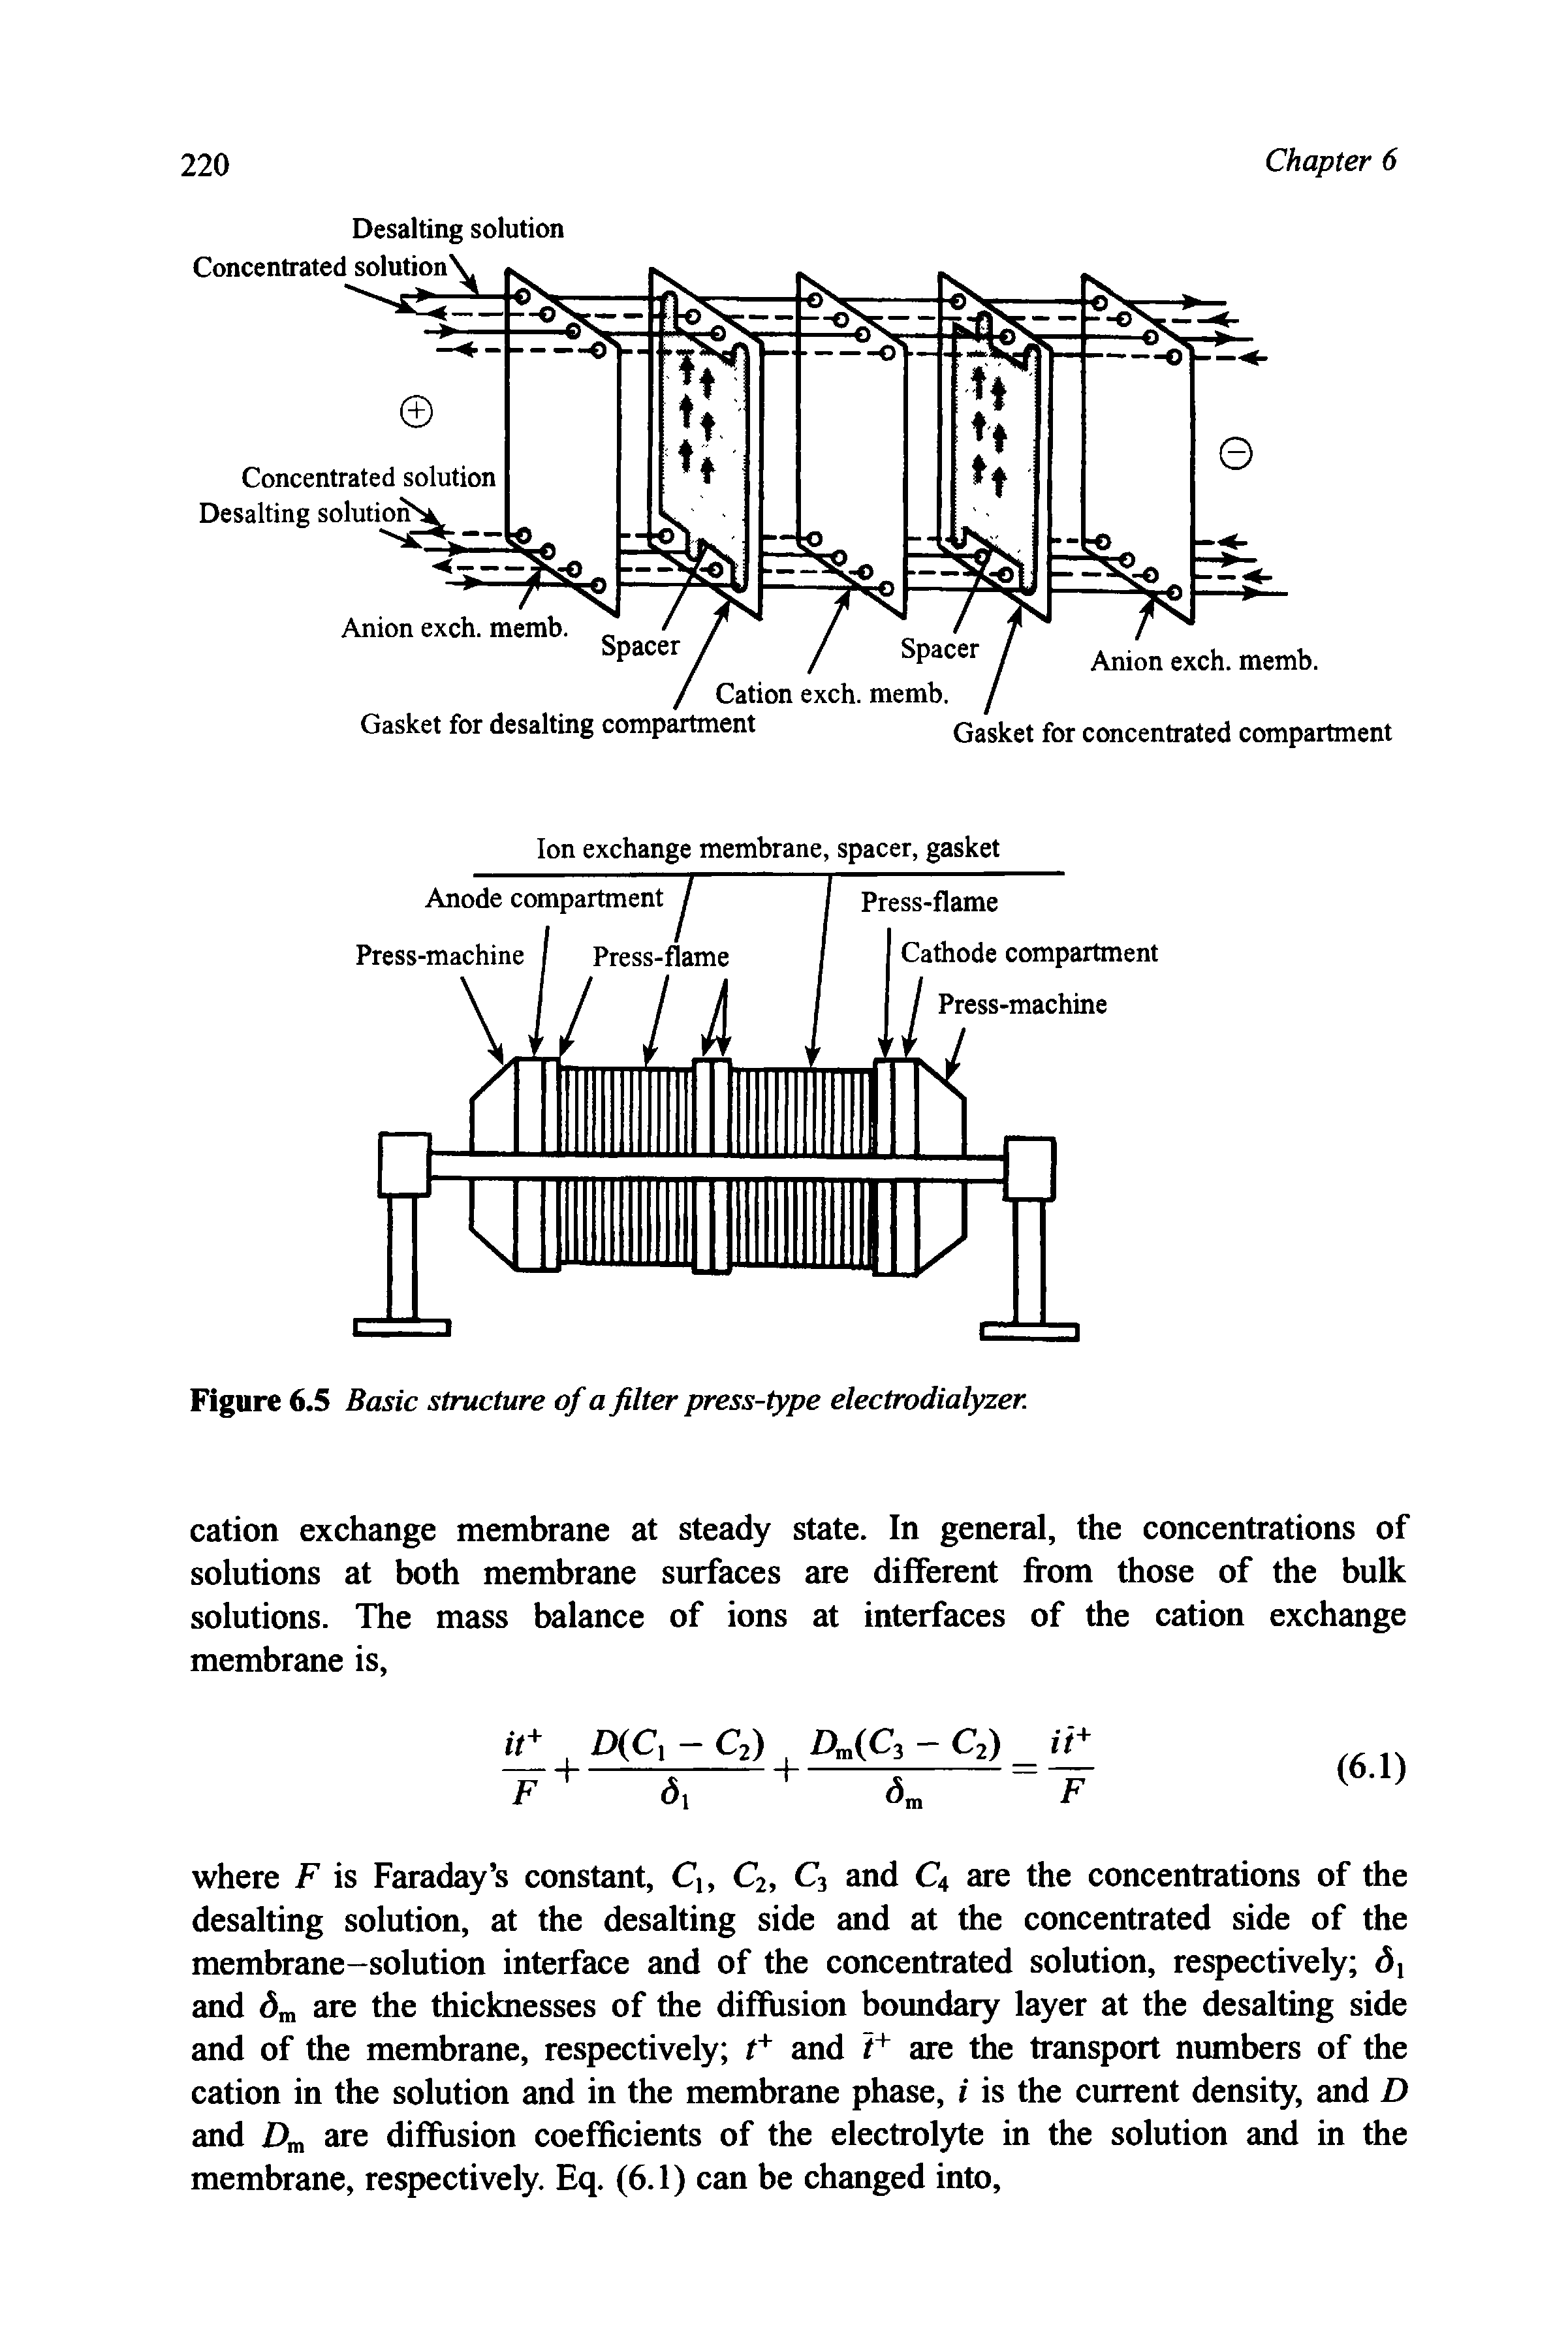 Figure 6.5 Basic structure of a filter press-type electrodialyzer.